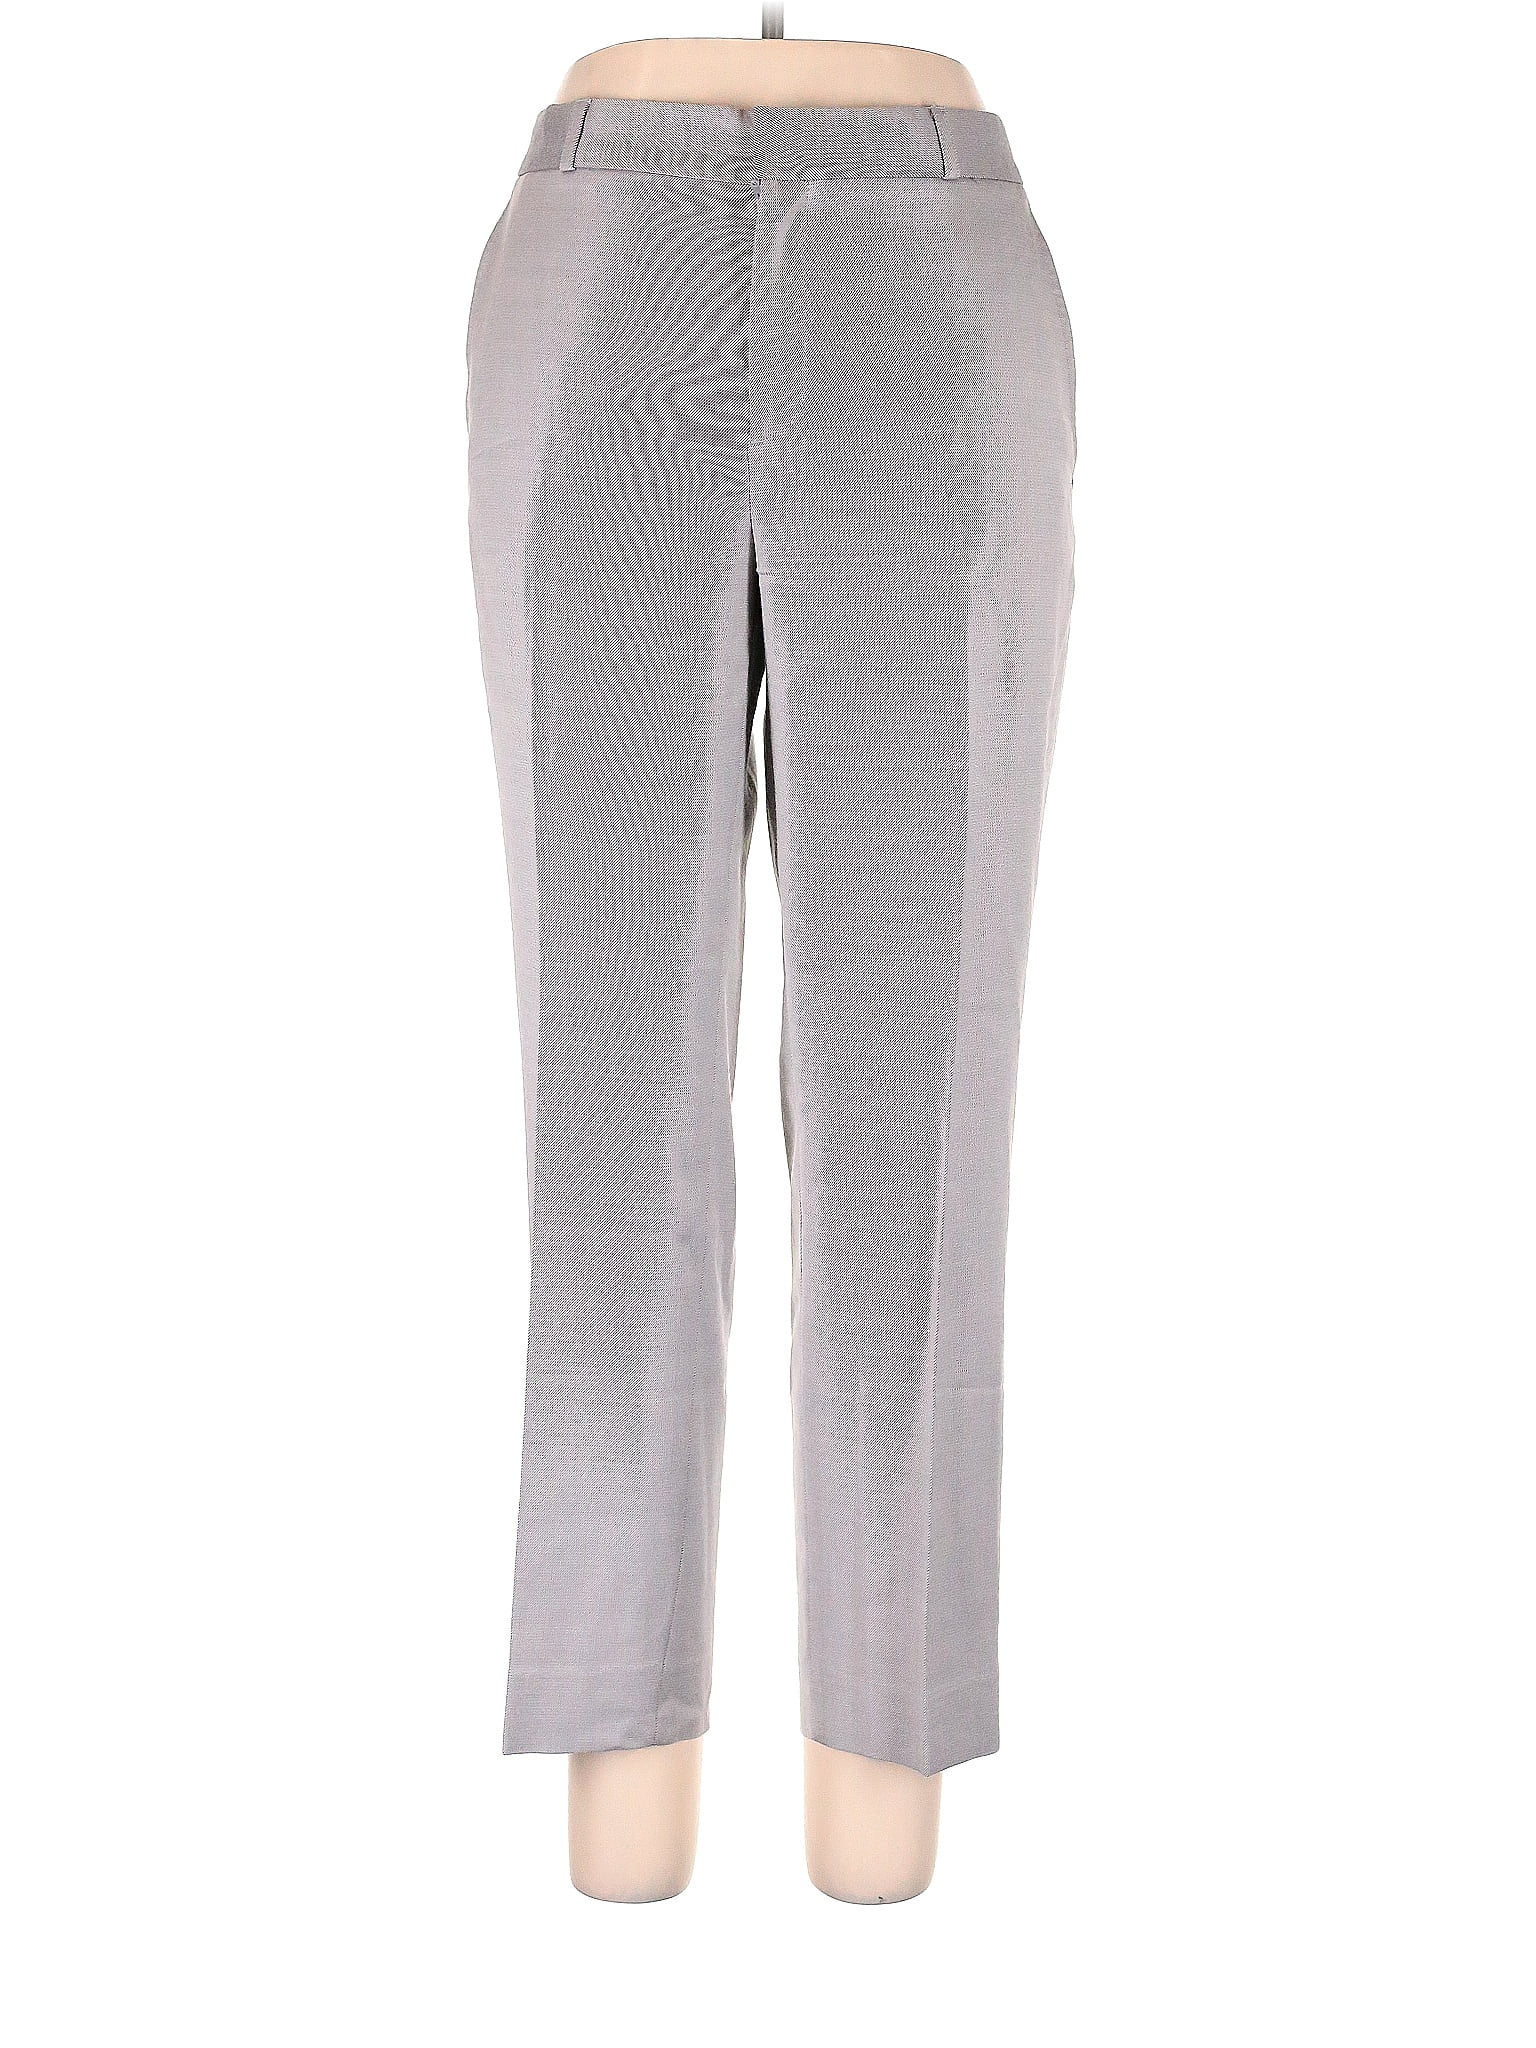 Banana Republic Gray Dress Pants Size 12 - 80% off | thredUP